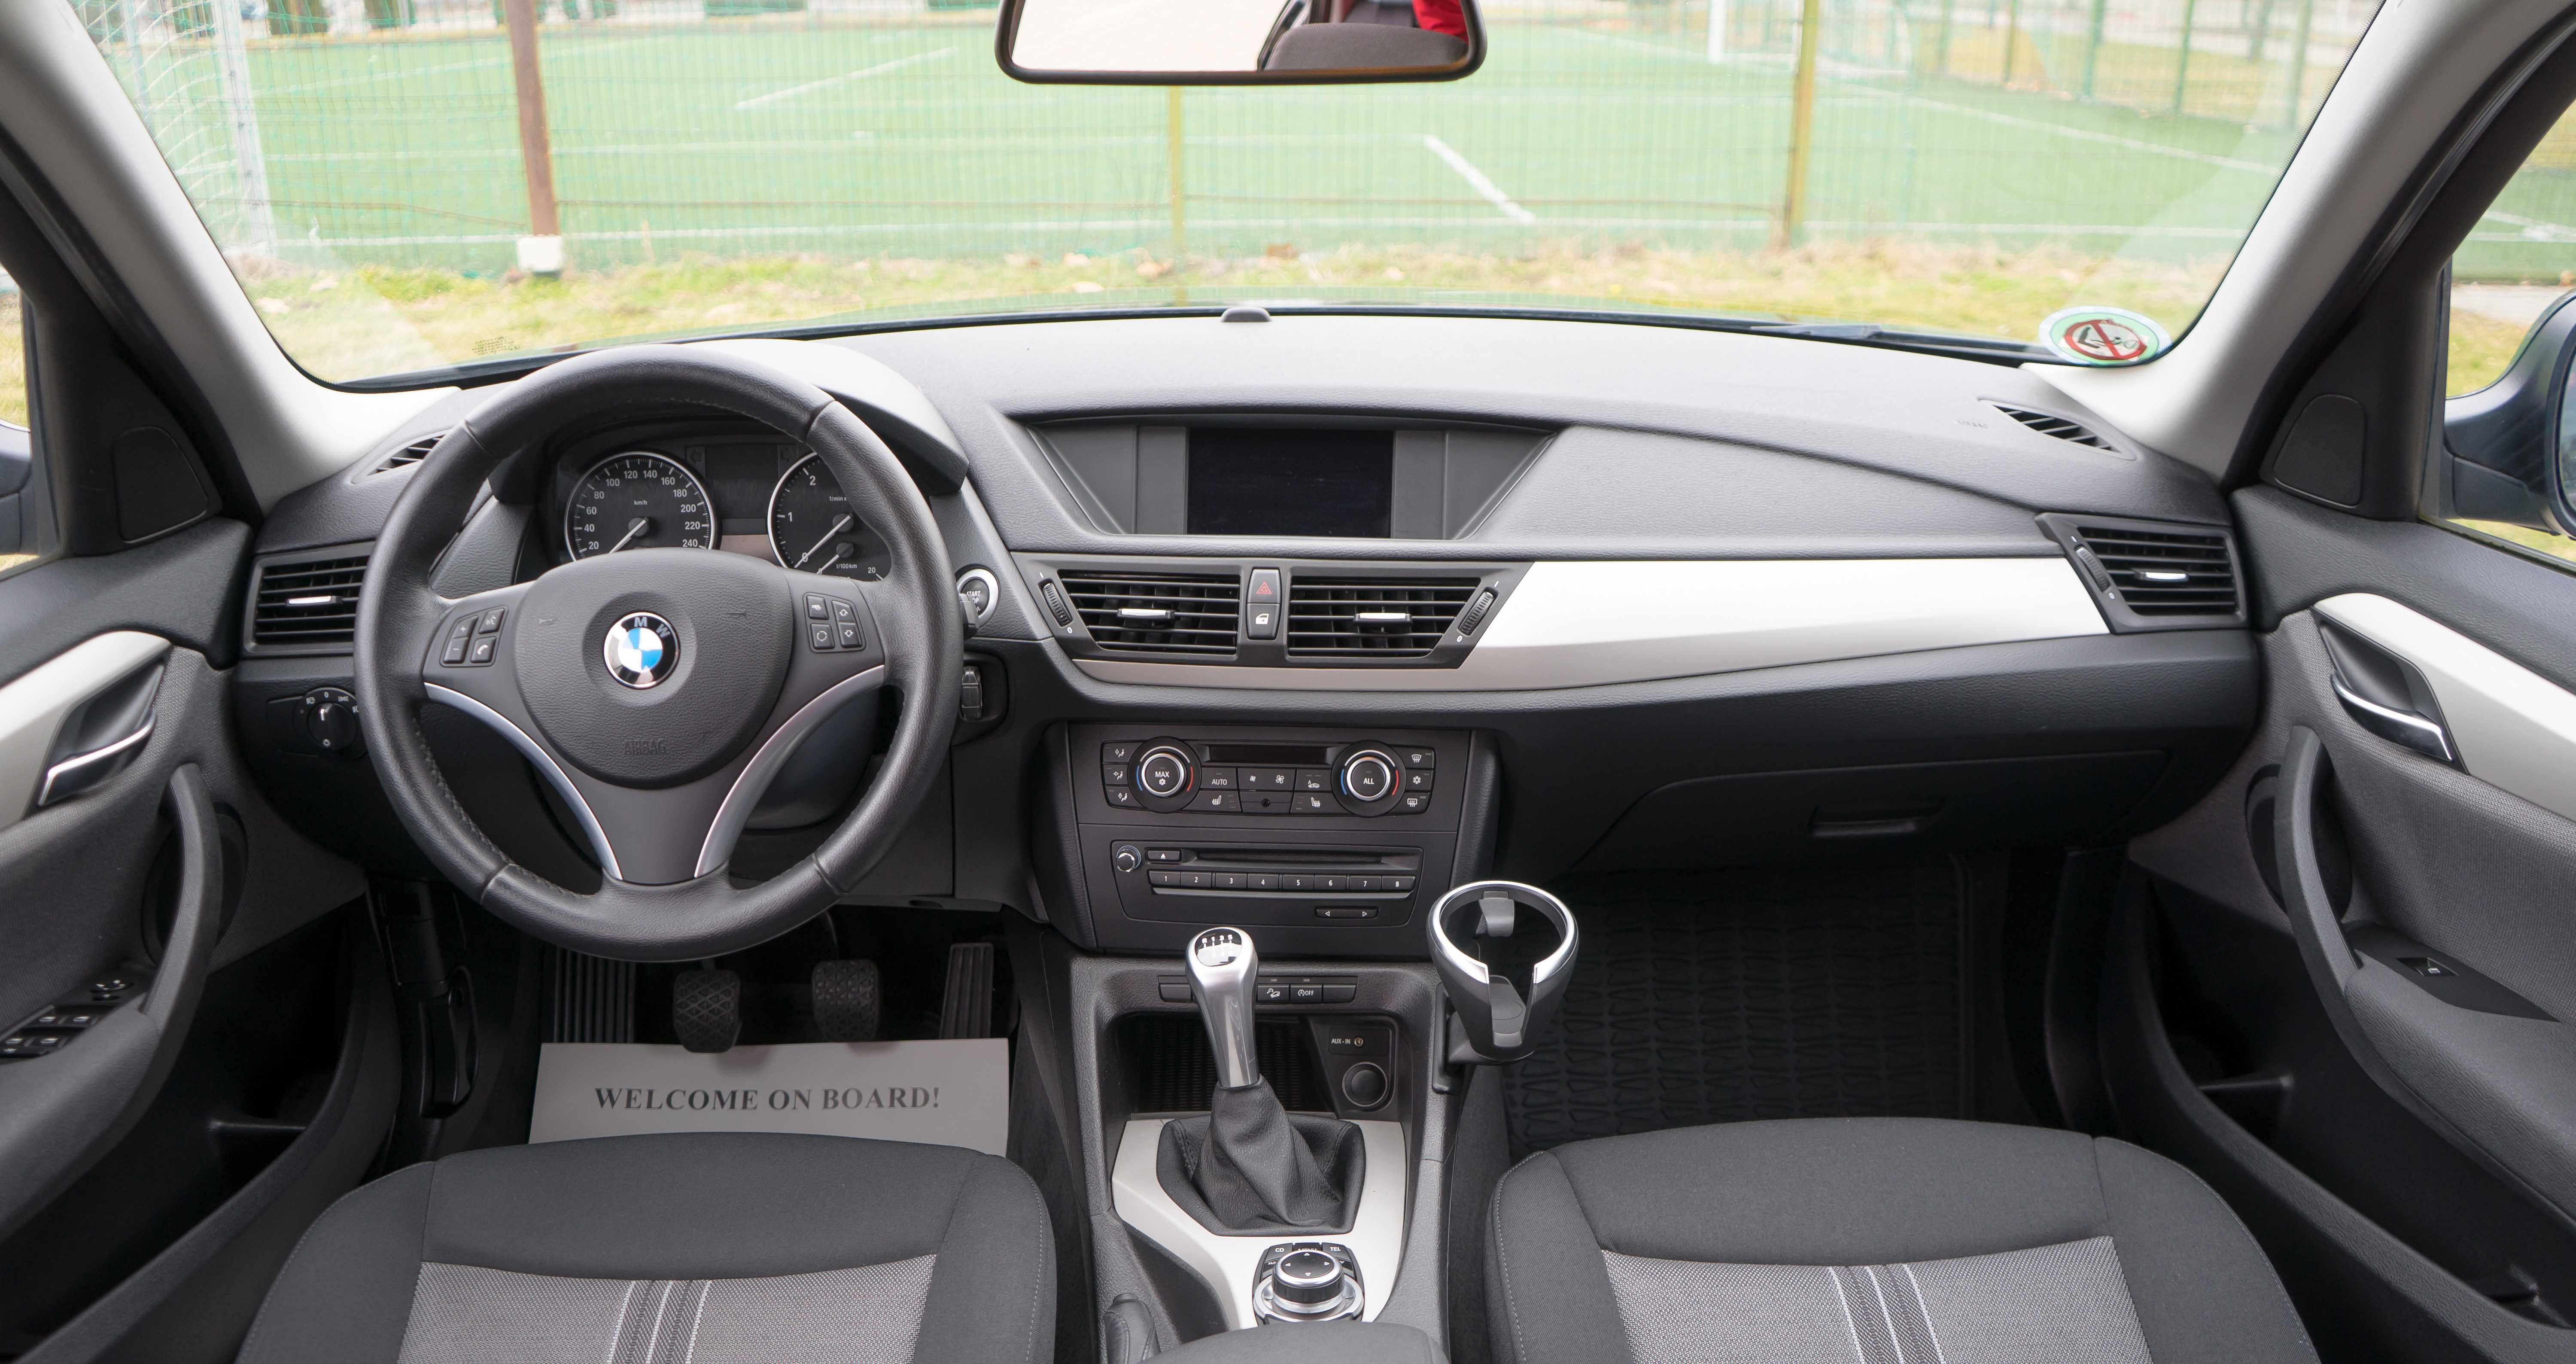 Garantie 1An. BMW X1 2012 X-Drive Navi Xenon 4x4 KmReali FaraAccidente